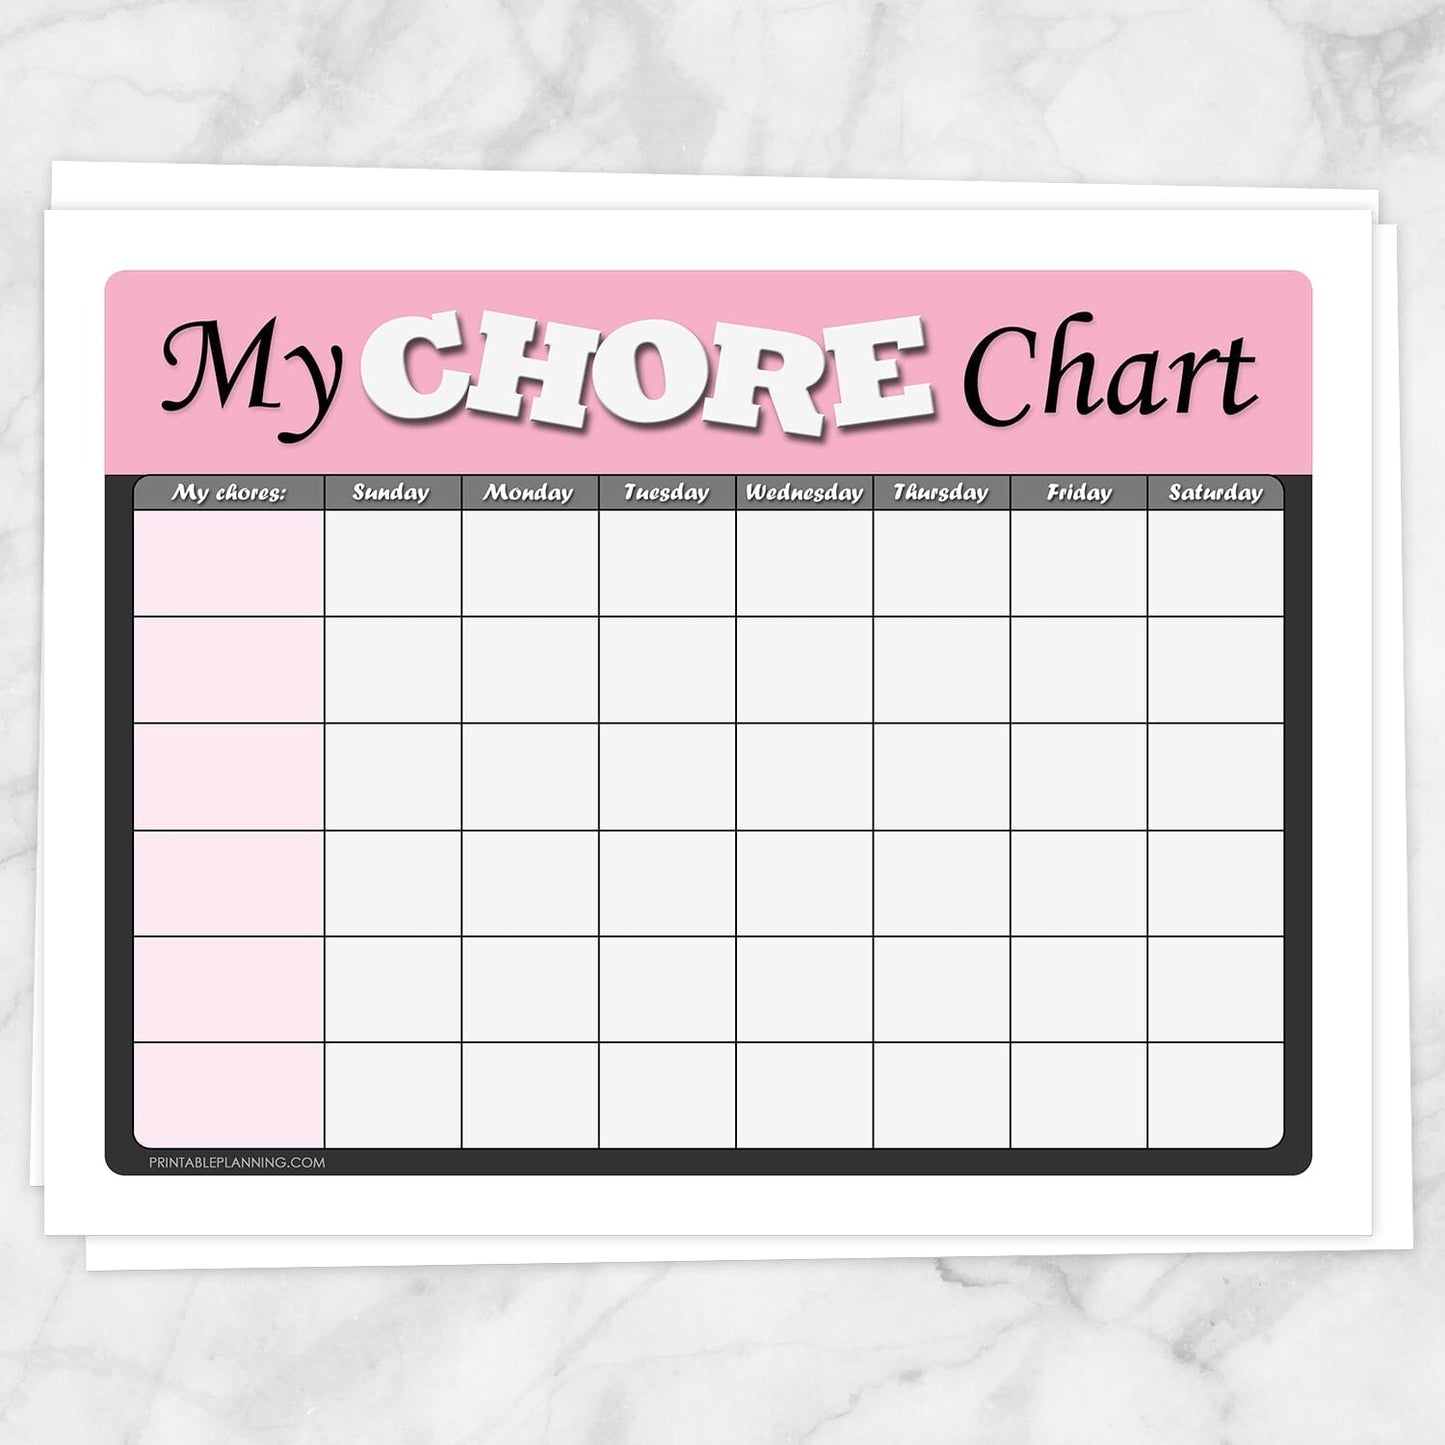 Printable Kids Chore Chart - Pink 'My Chore Chart' Weekly Page at Printable Planning.